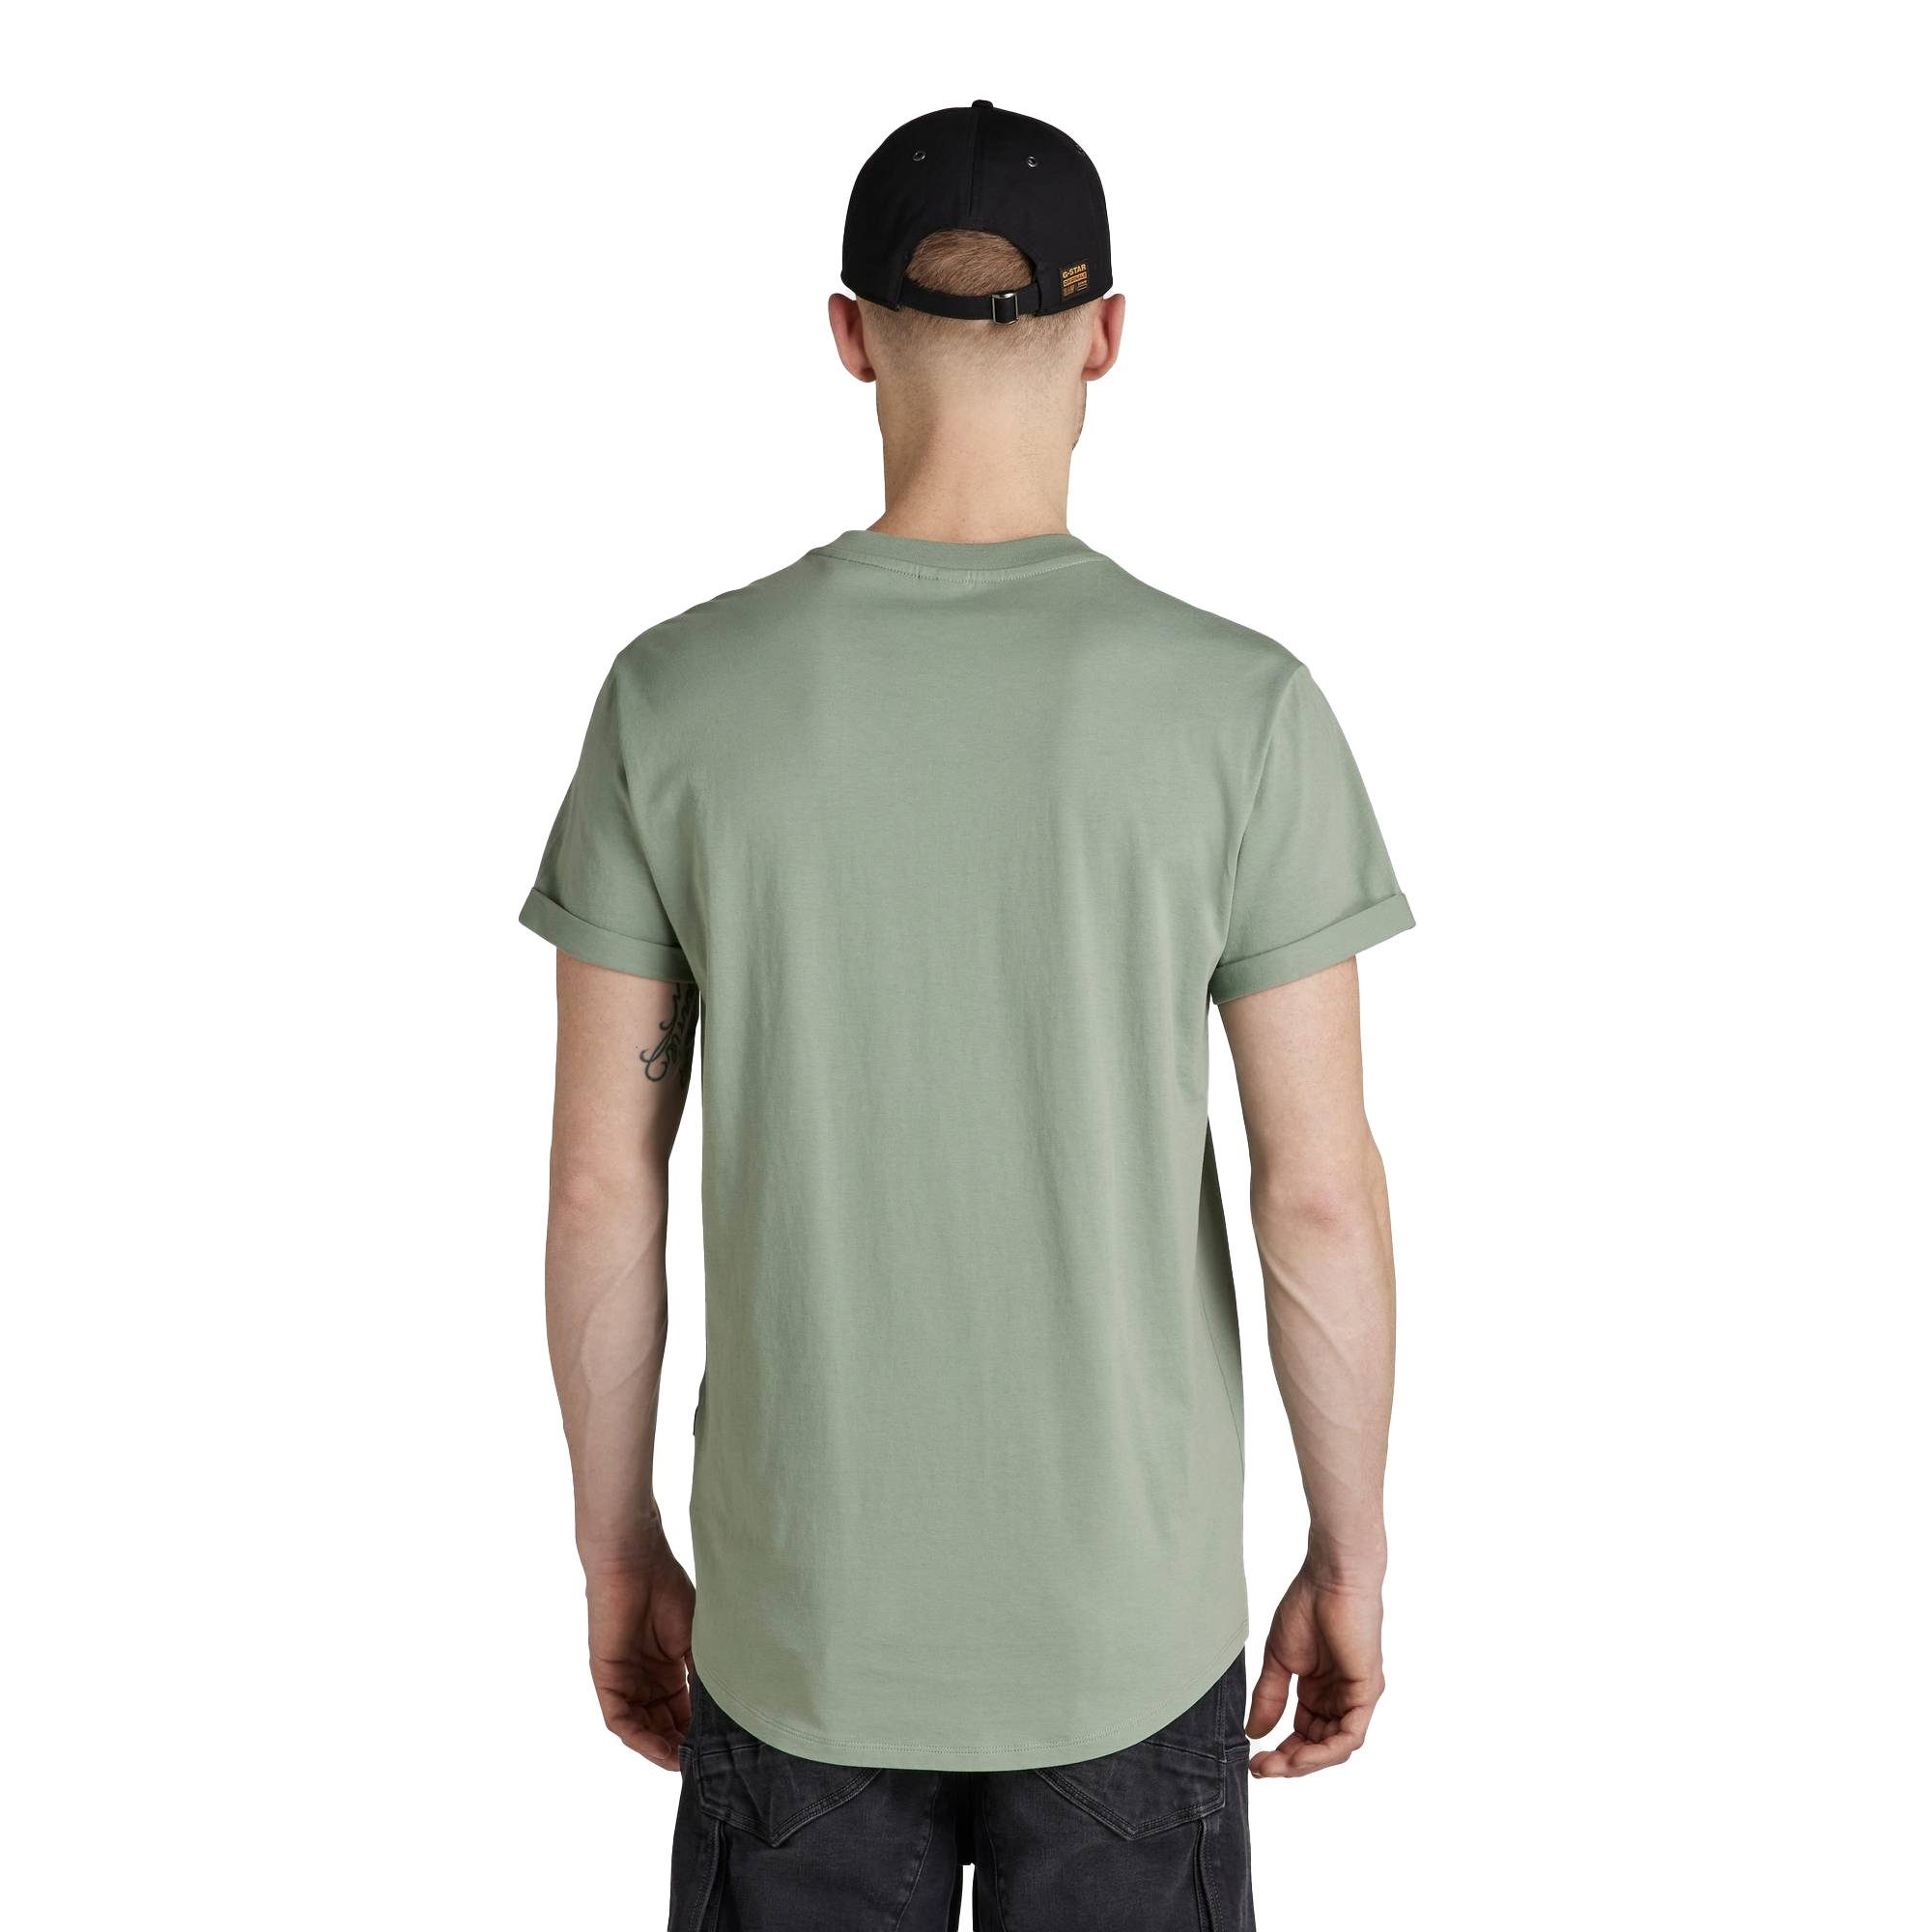 Mintgrün Rundhals, Lash, T-Shirt - Organic G-Star RAW Herren T-Shirt Cotton